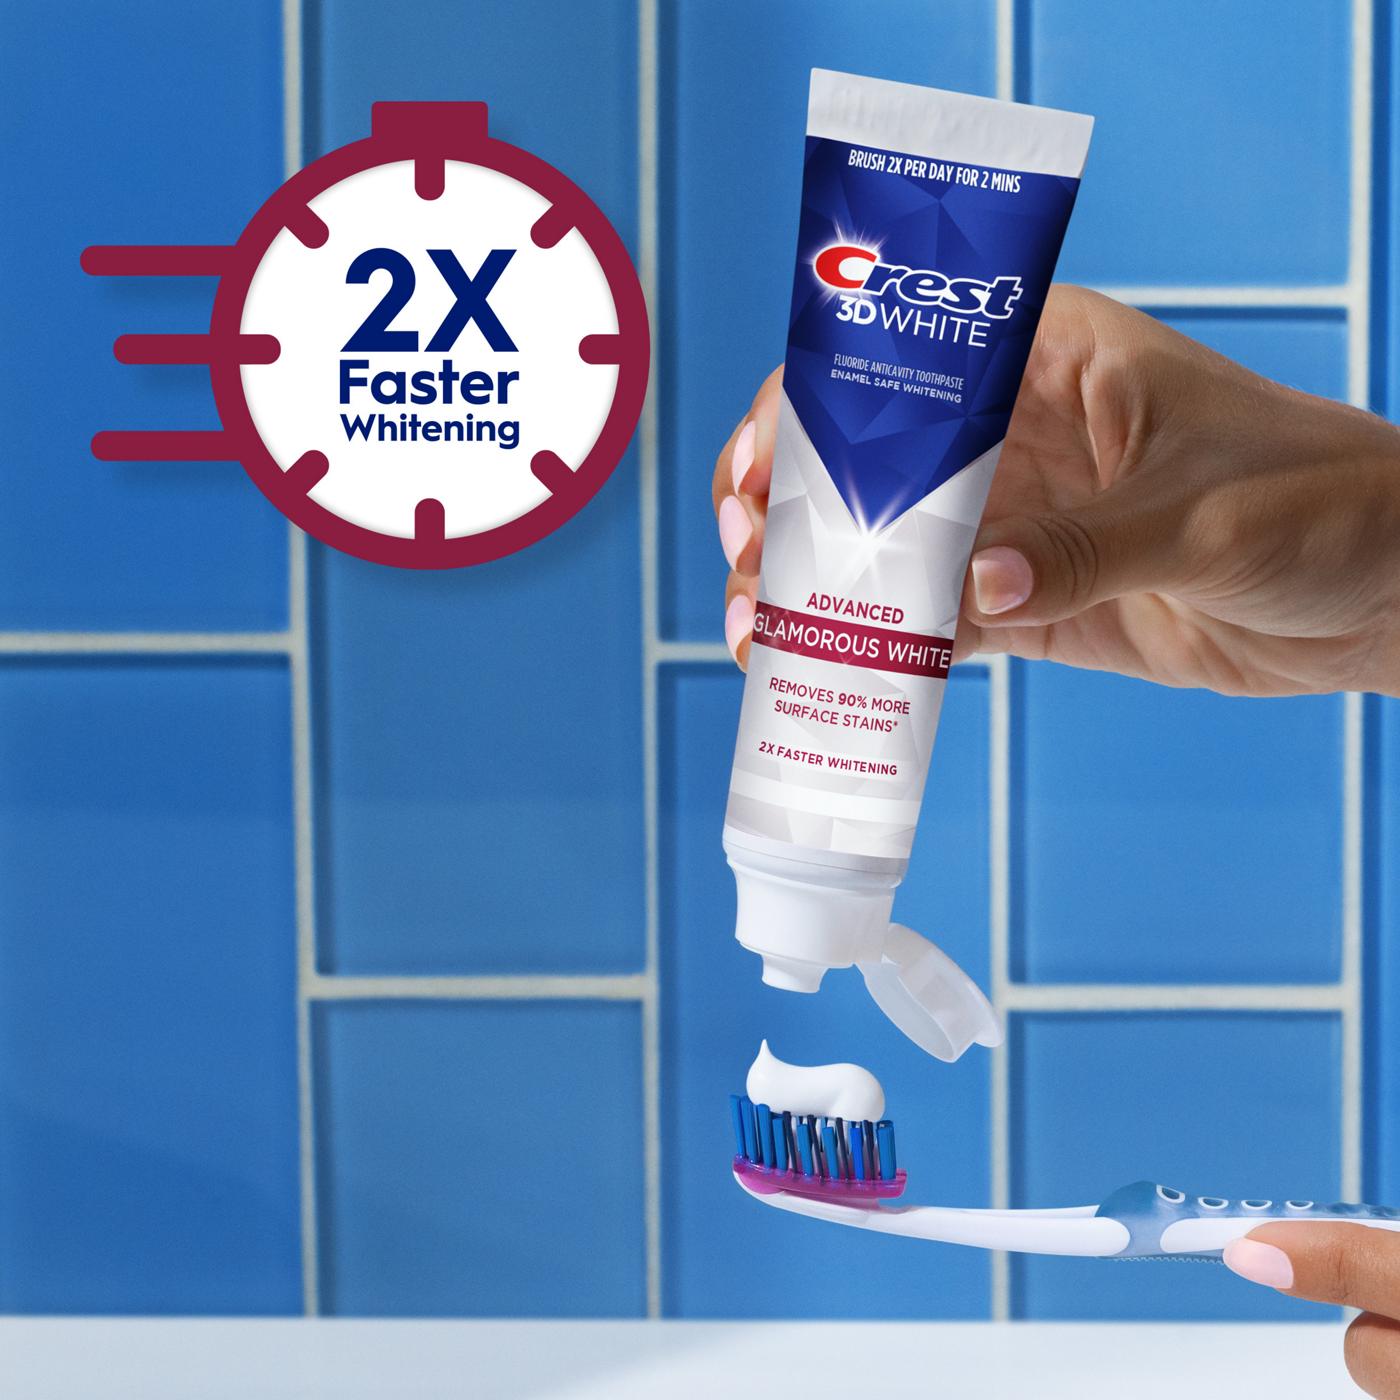 Crest 3D White Whitening Toothpaste - Glamorous White; image 6 of 8